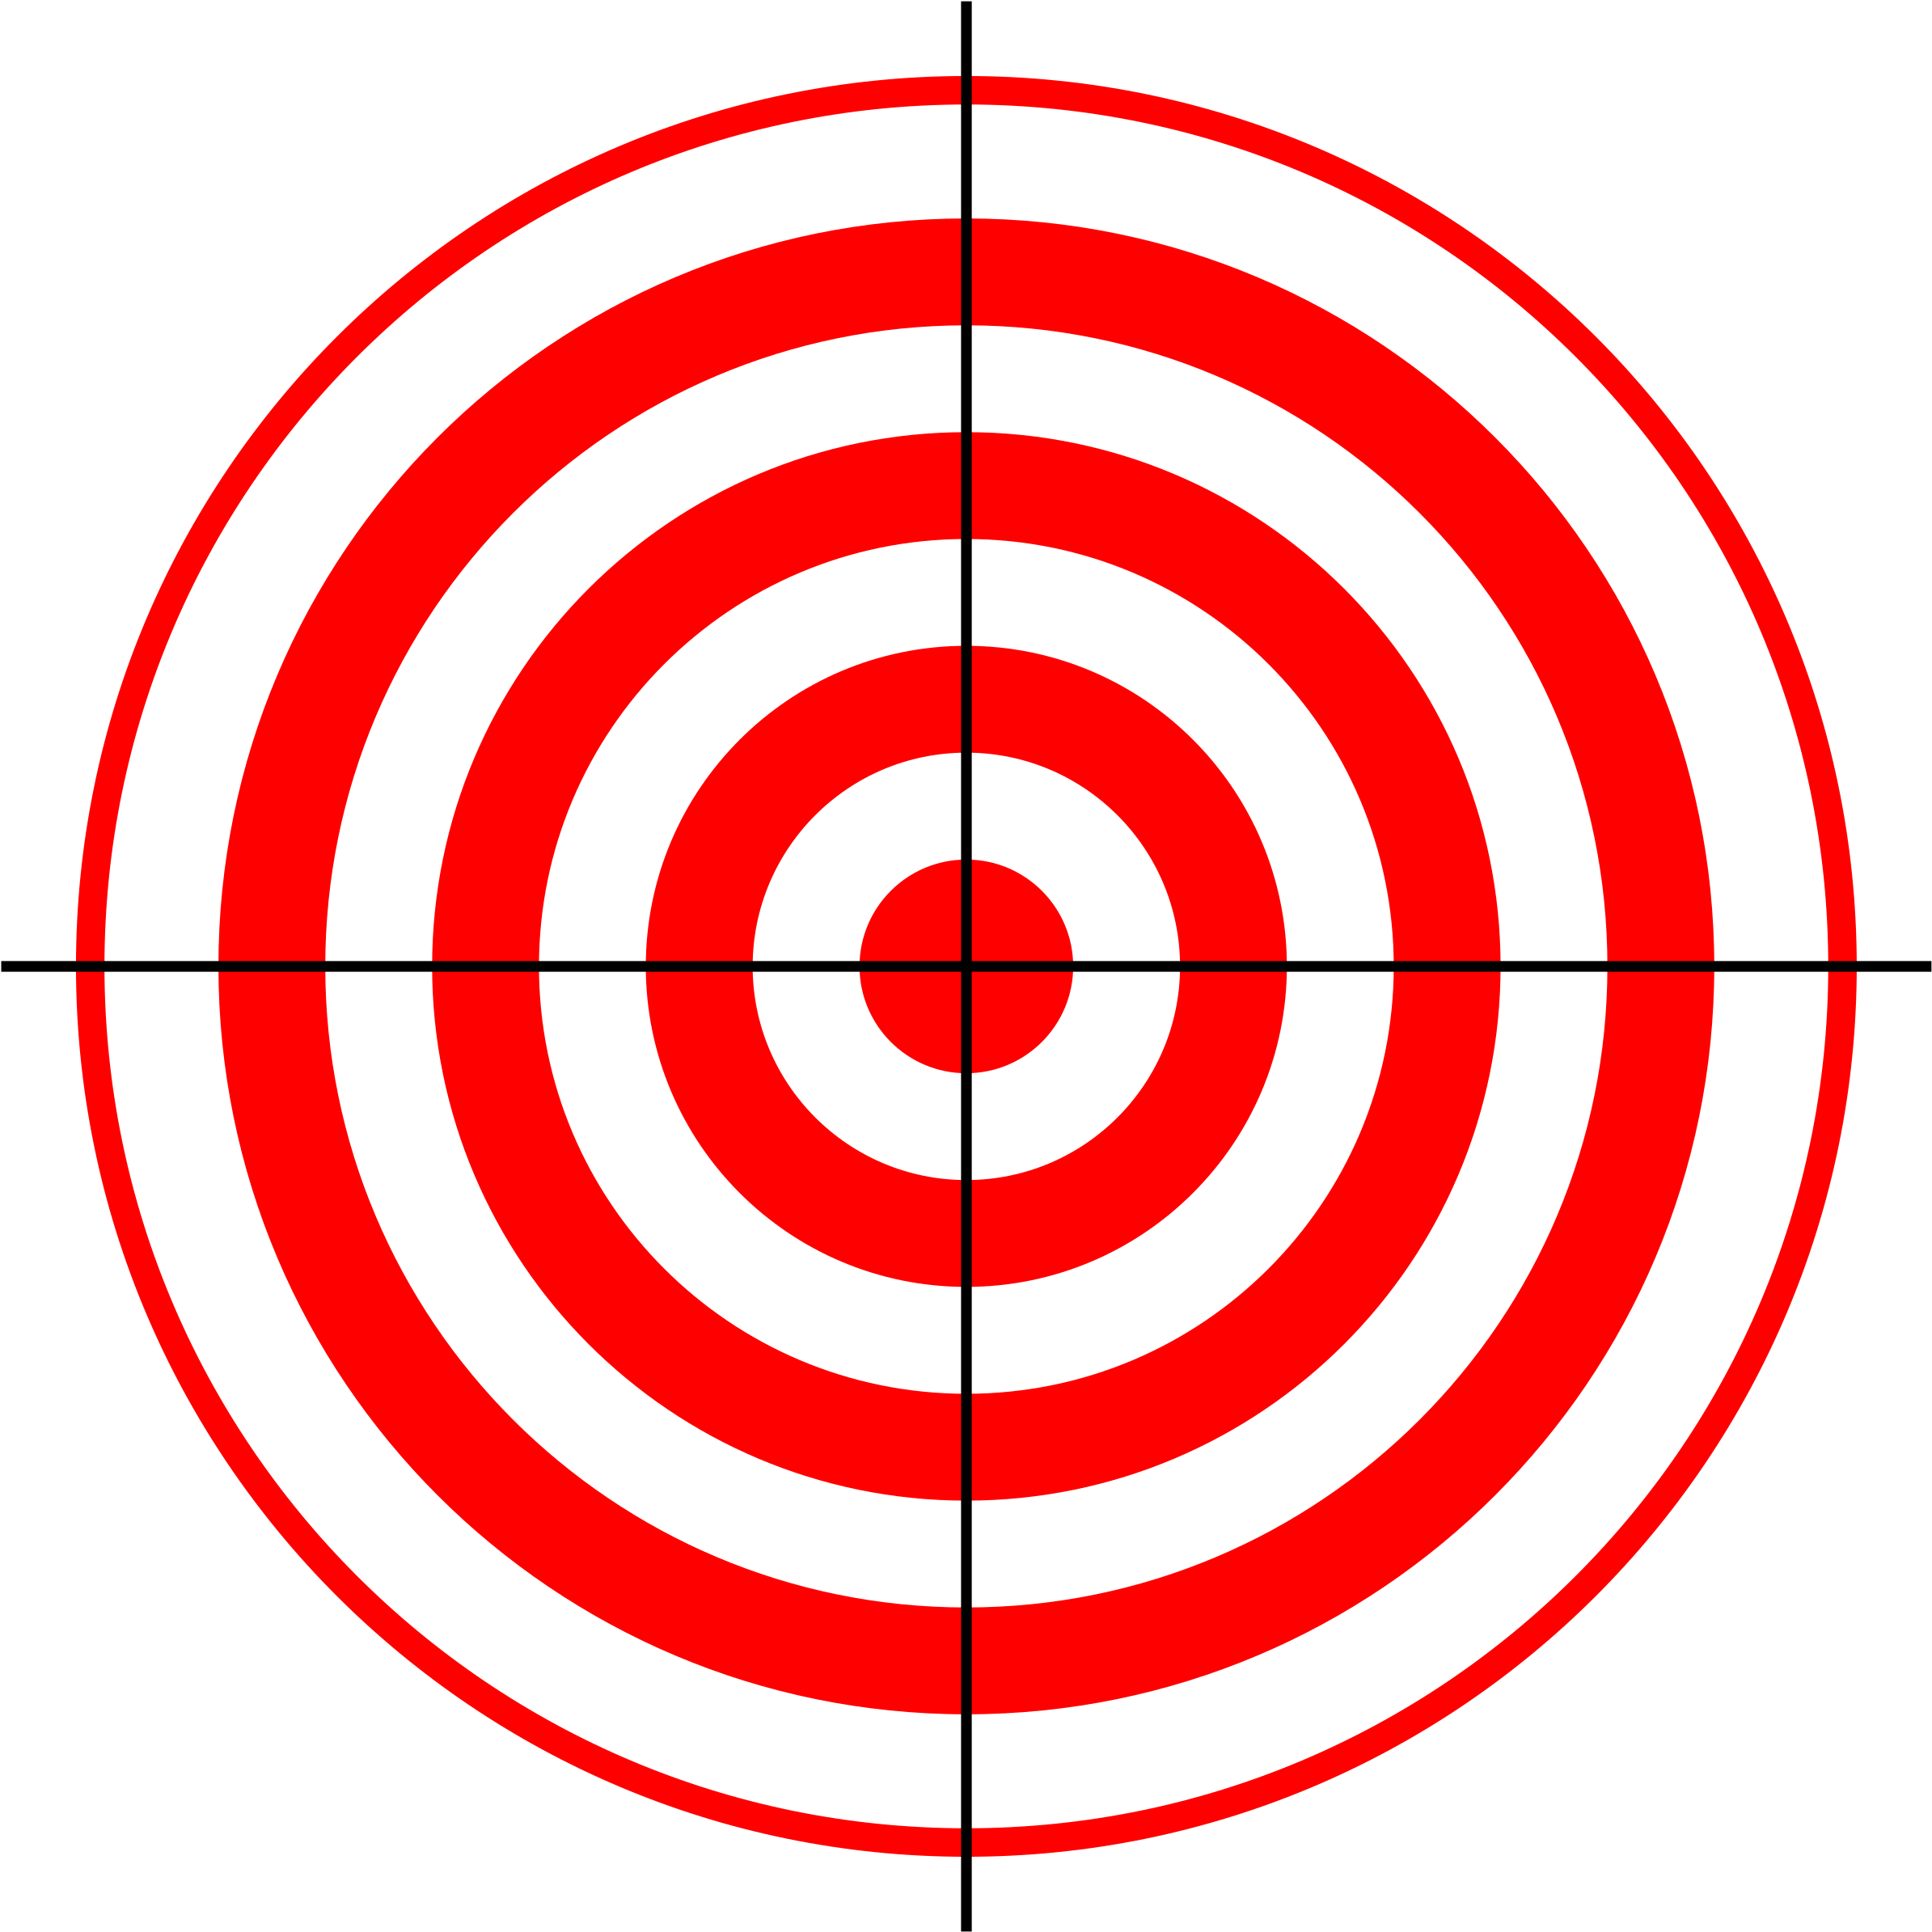 Target Png Hd - Target .png (2400x2400), Png Download